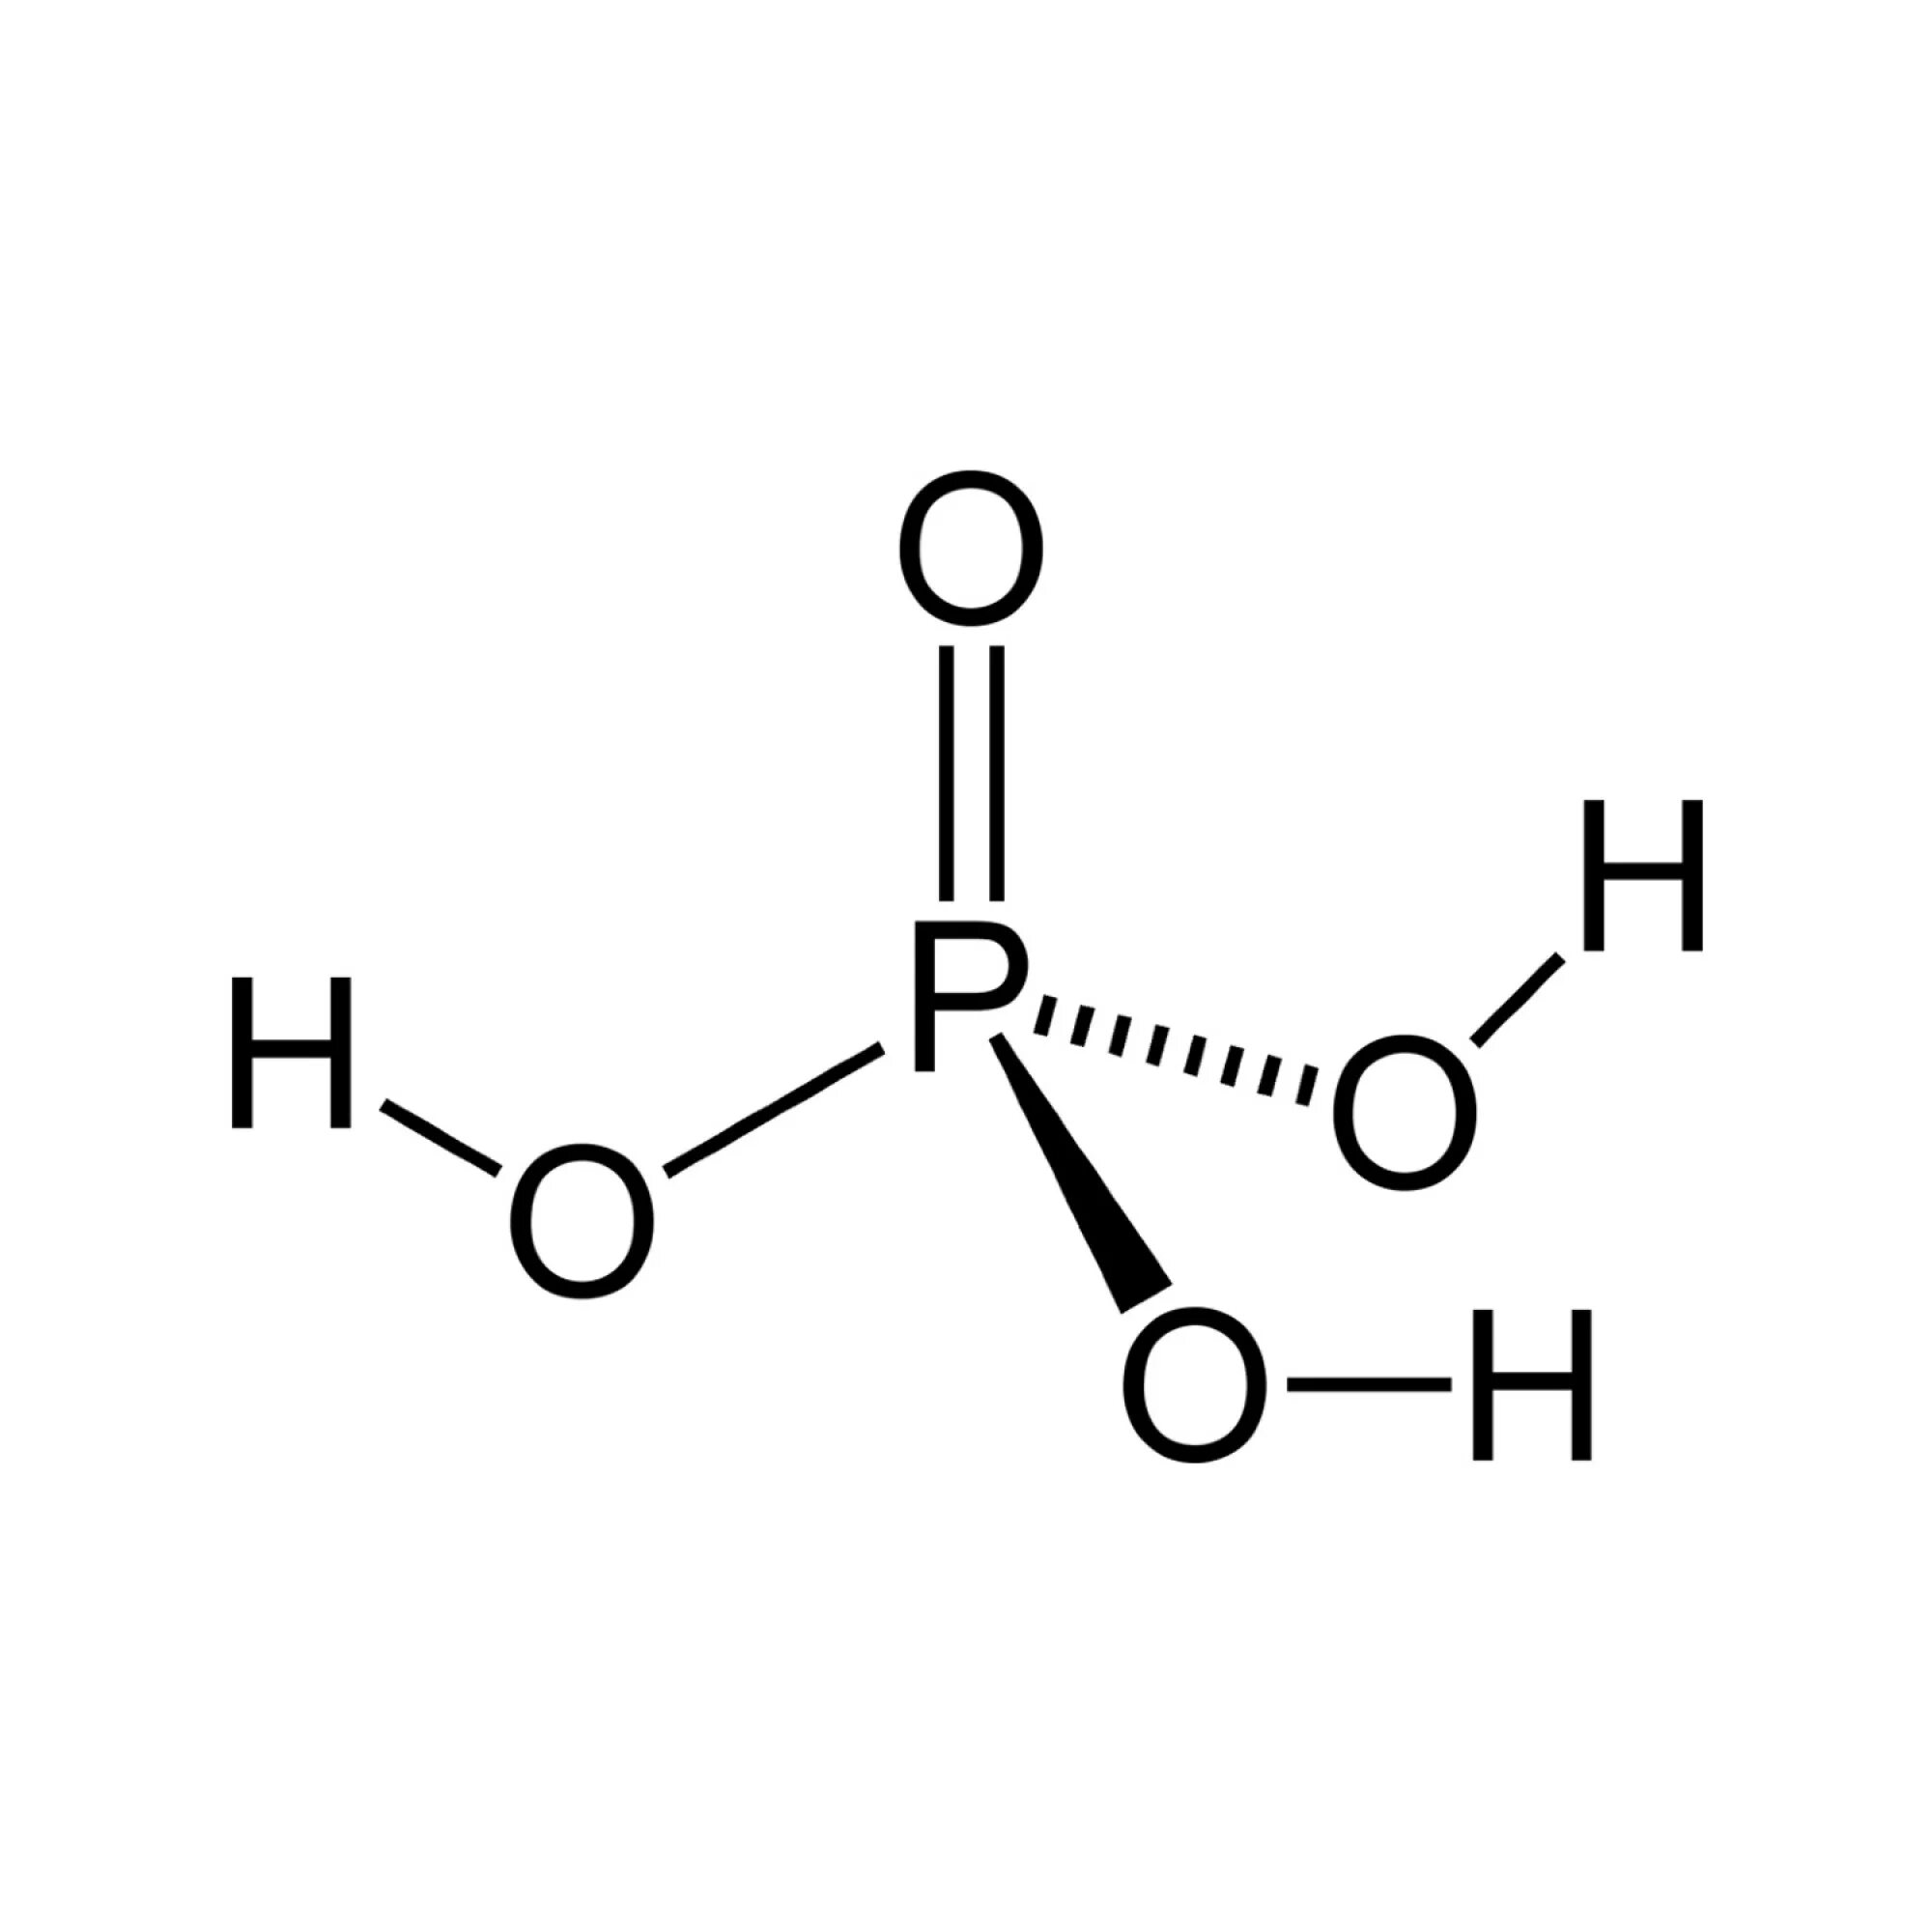 Ортофосфорная кислота графическая формула. Ортофосфорная кислота термическая. Ортофосфорная кислота 85%. Молекулярная формула муравьиной кислоты. Ортофосфорная кислота тип связи